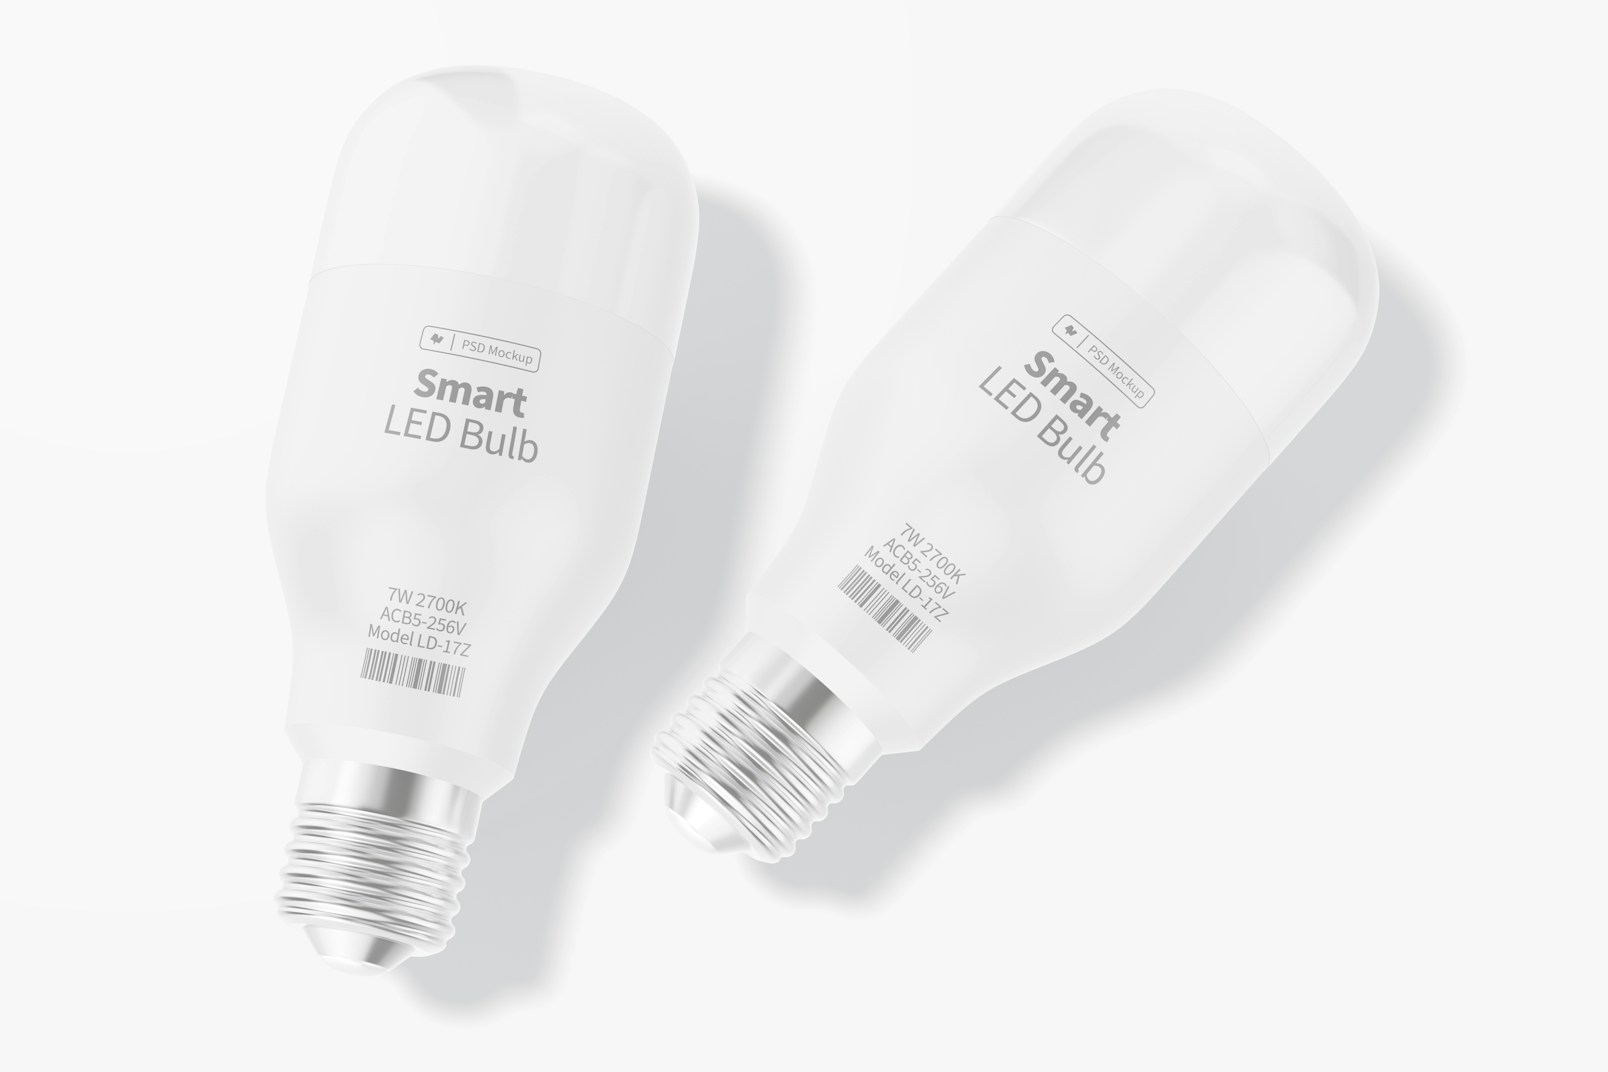 Smart LED Bulbs Mockup, Top View